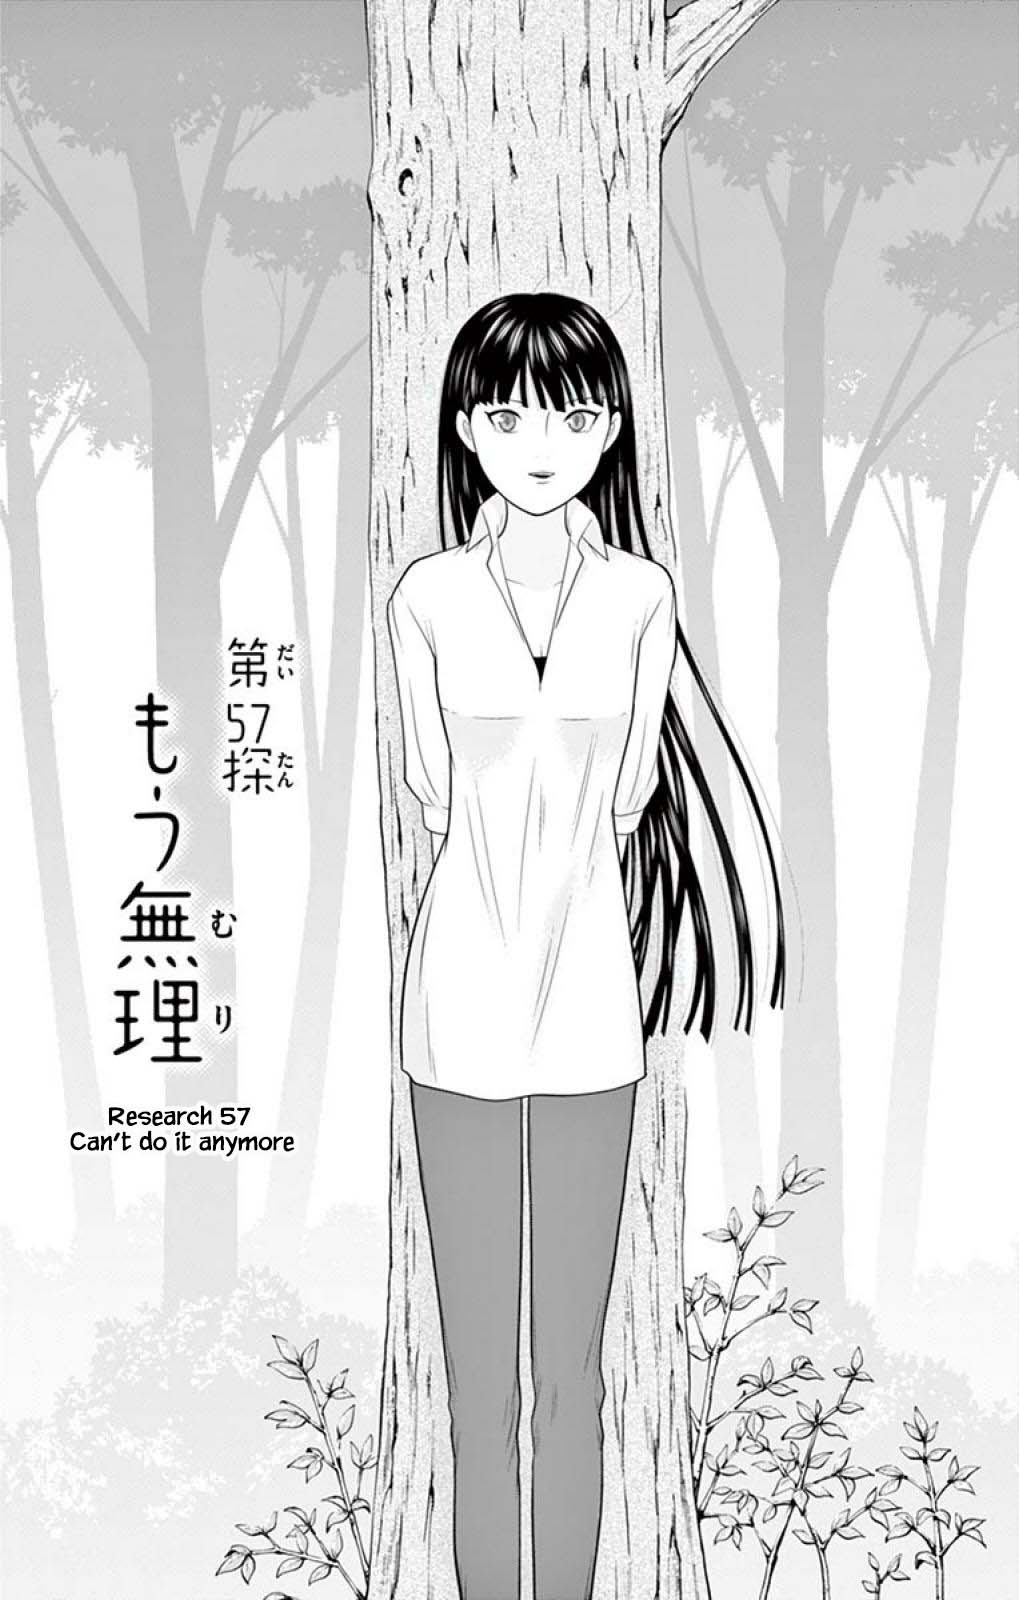 Hiiragi-Sama Is Looking For Herself - chapter 57 - #1